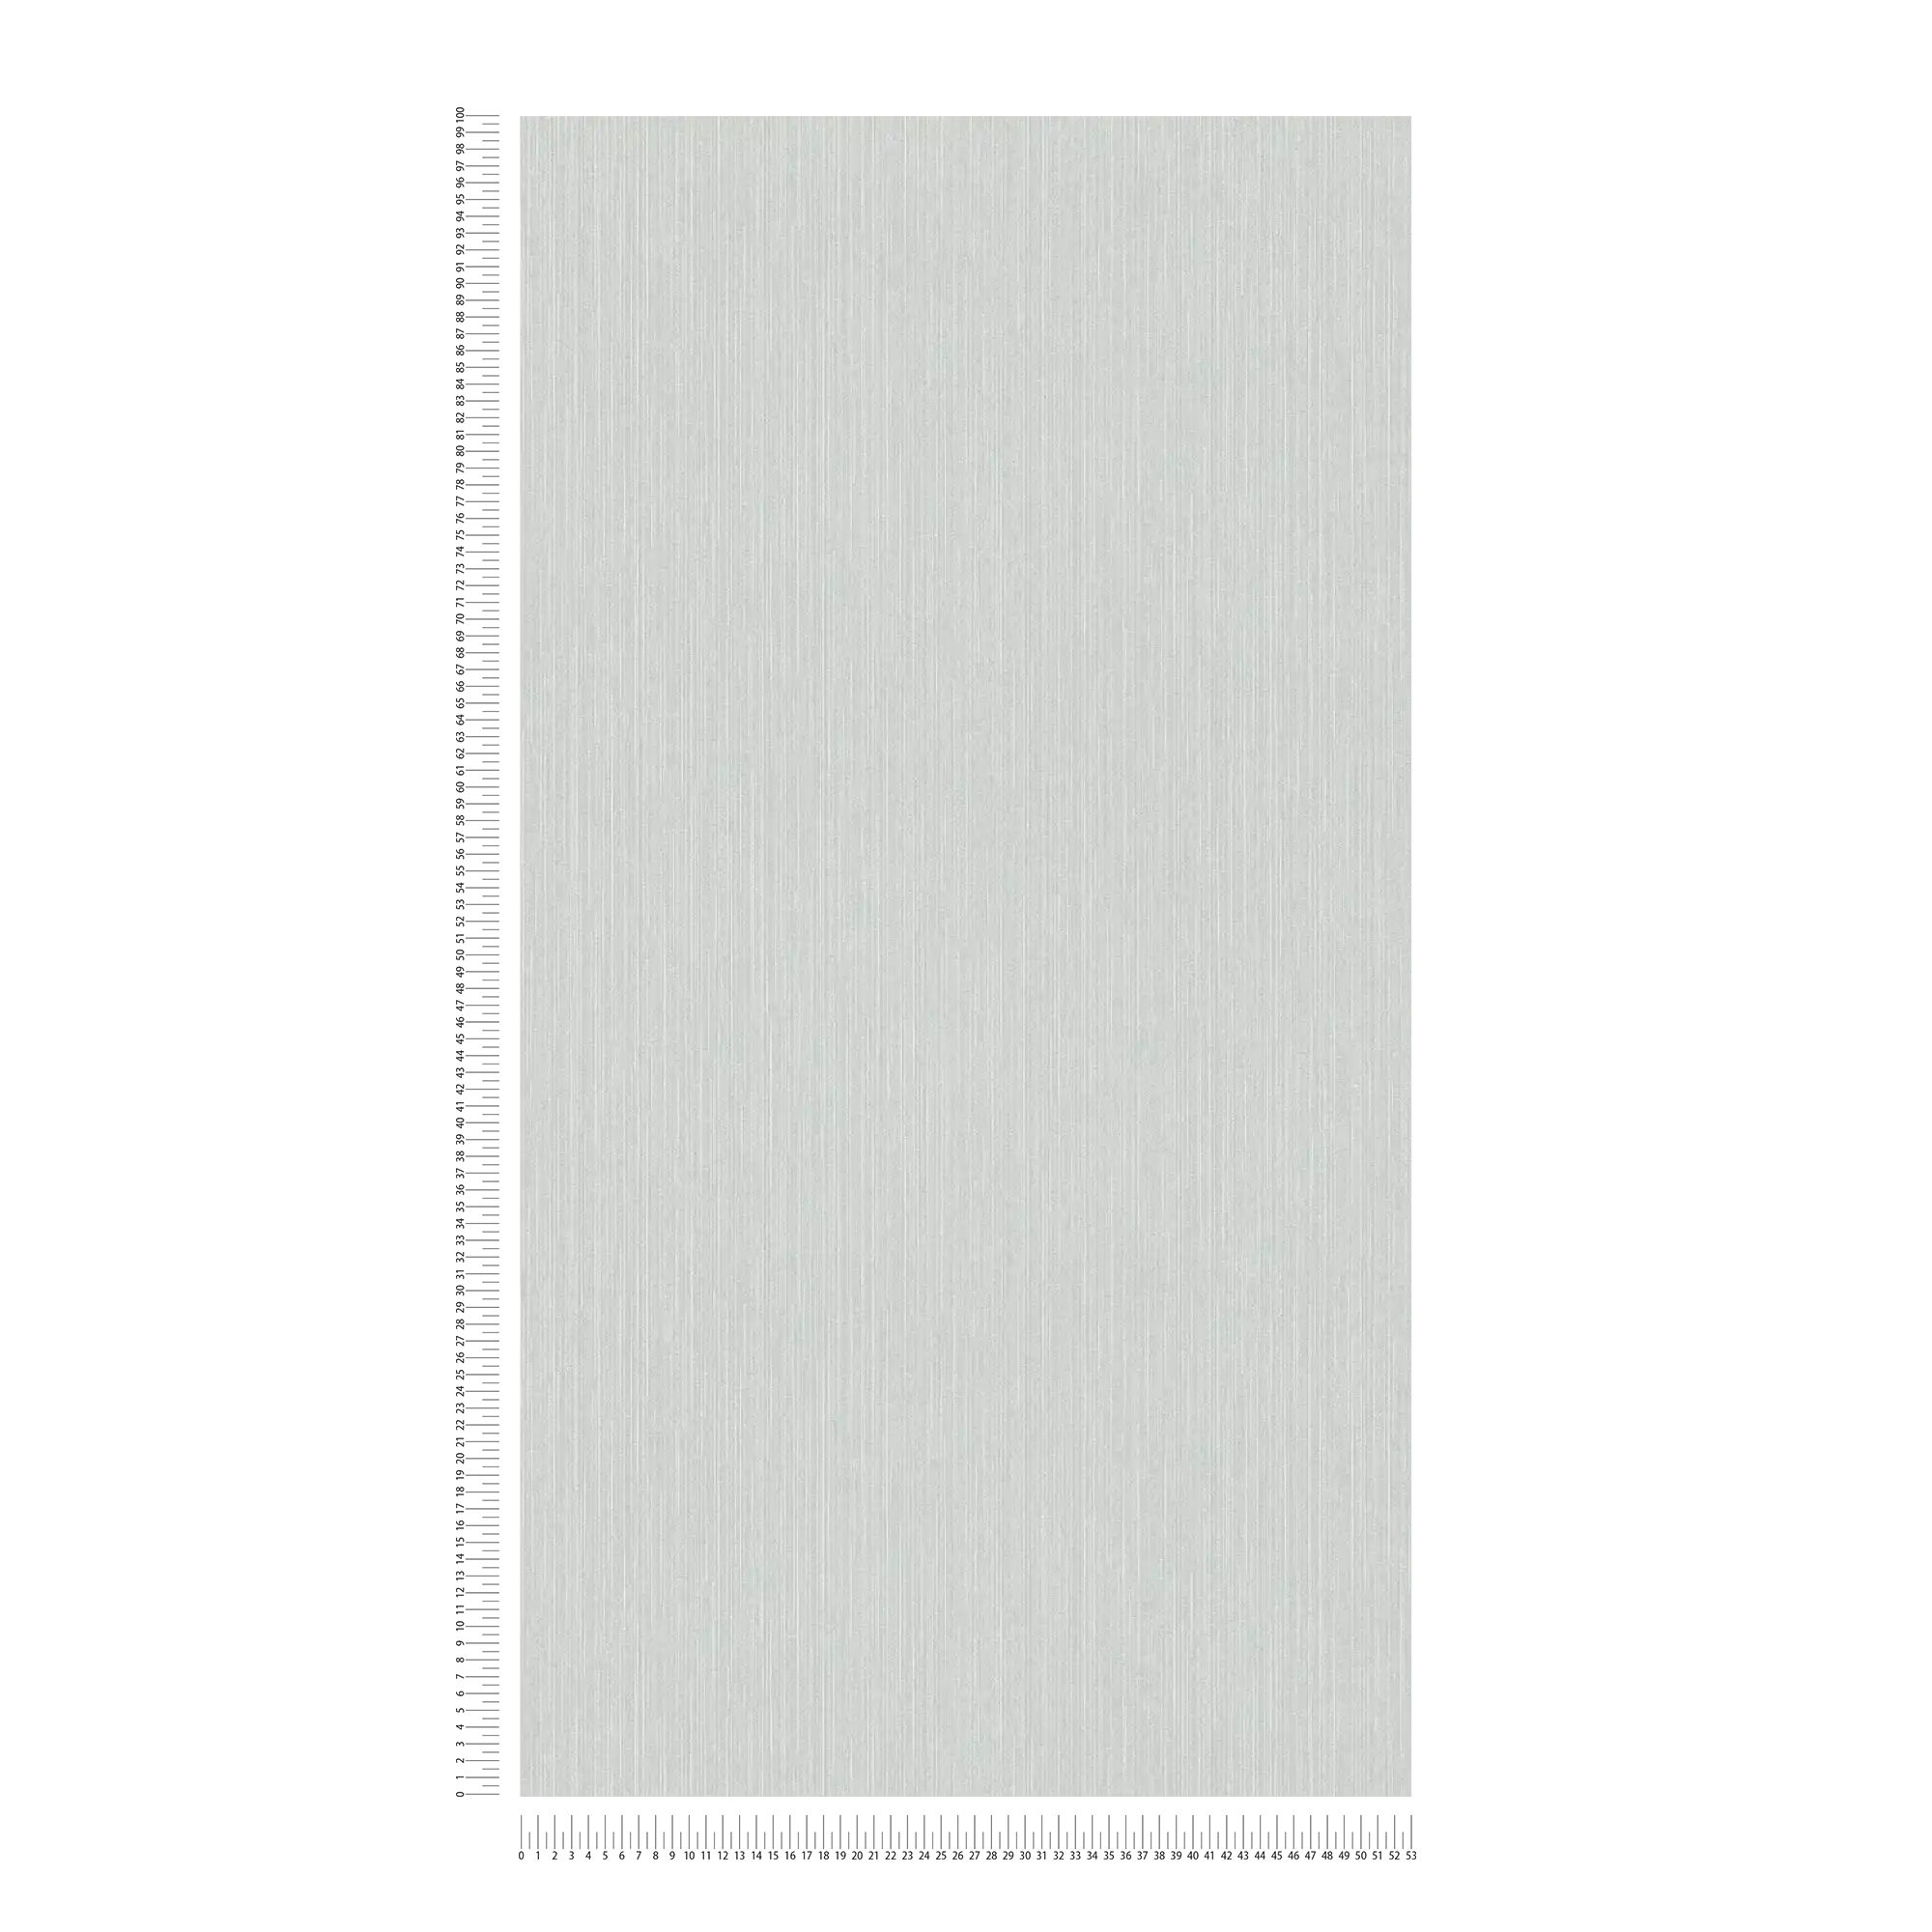             Linierte Tapete Silbergrau mit Glanzeffekt – Grau
        